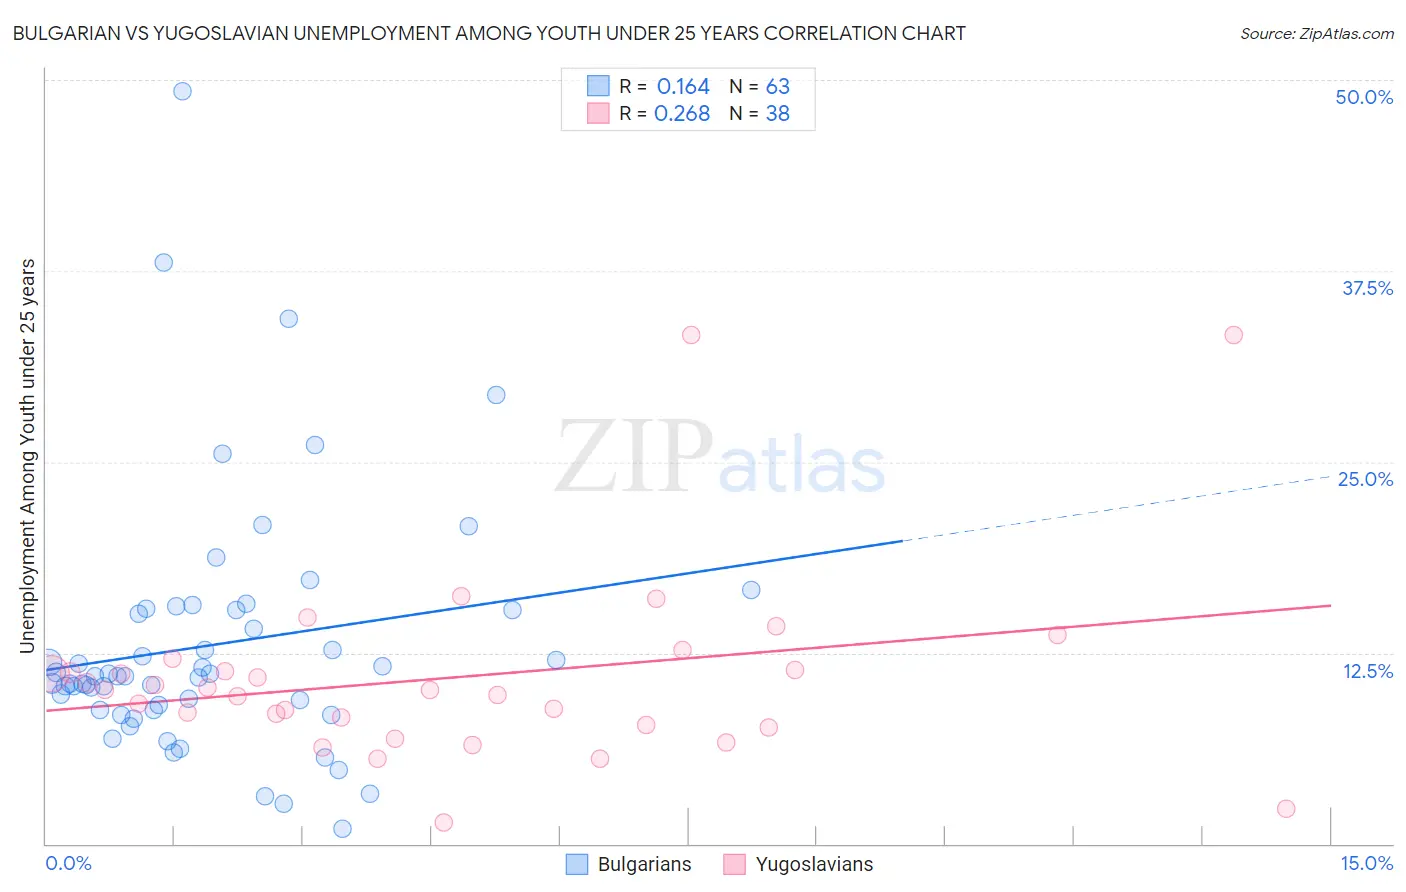 Bulgarian vs Yugoslavian Unemployment Among Youth under 25 years